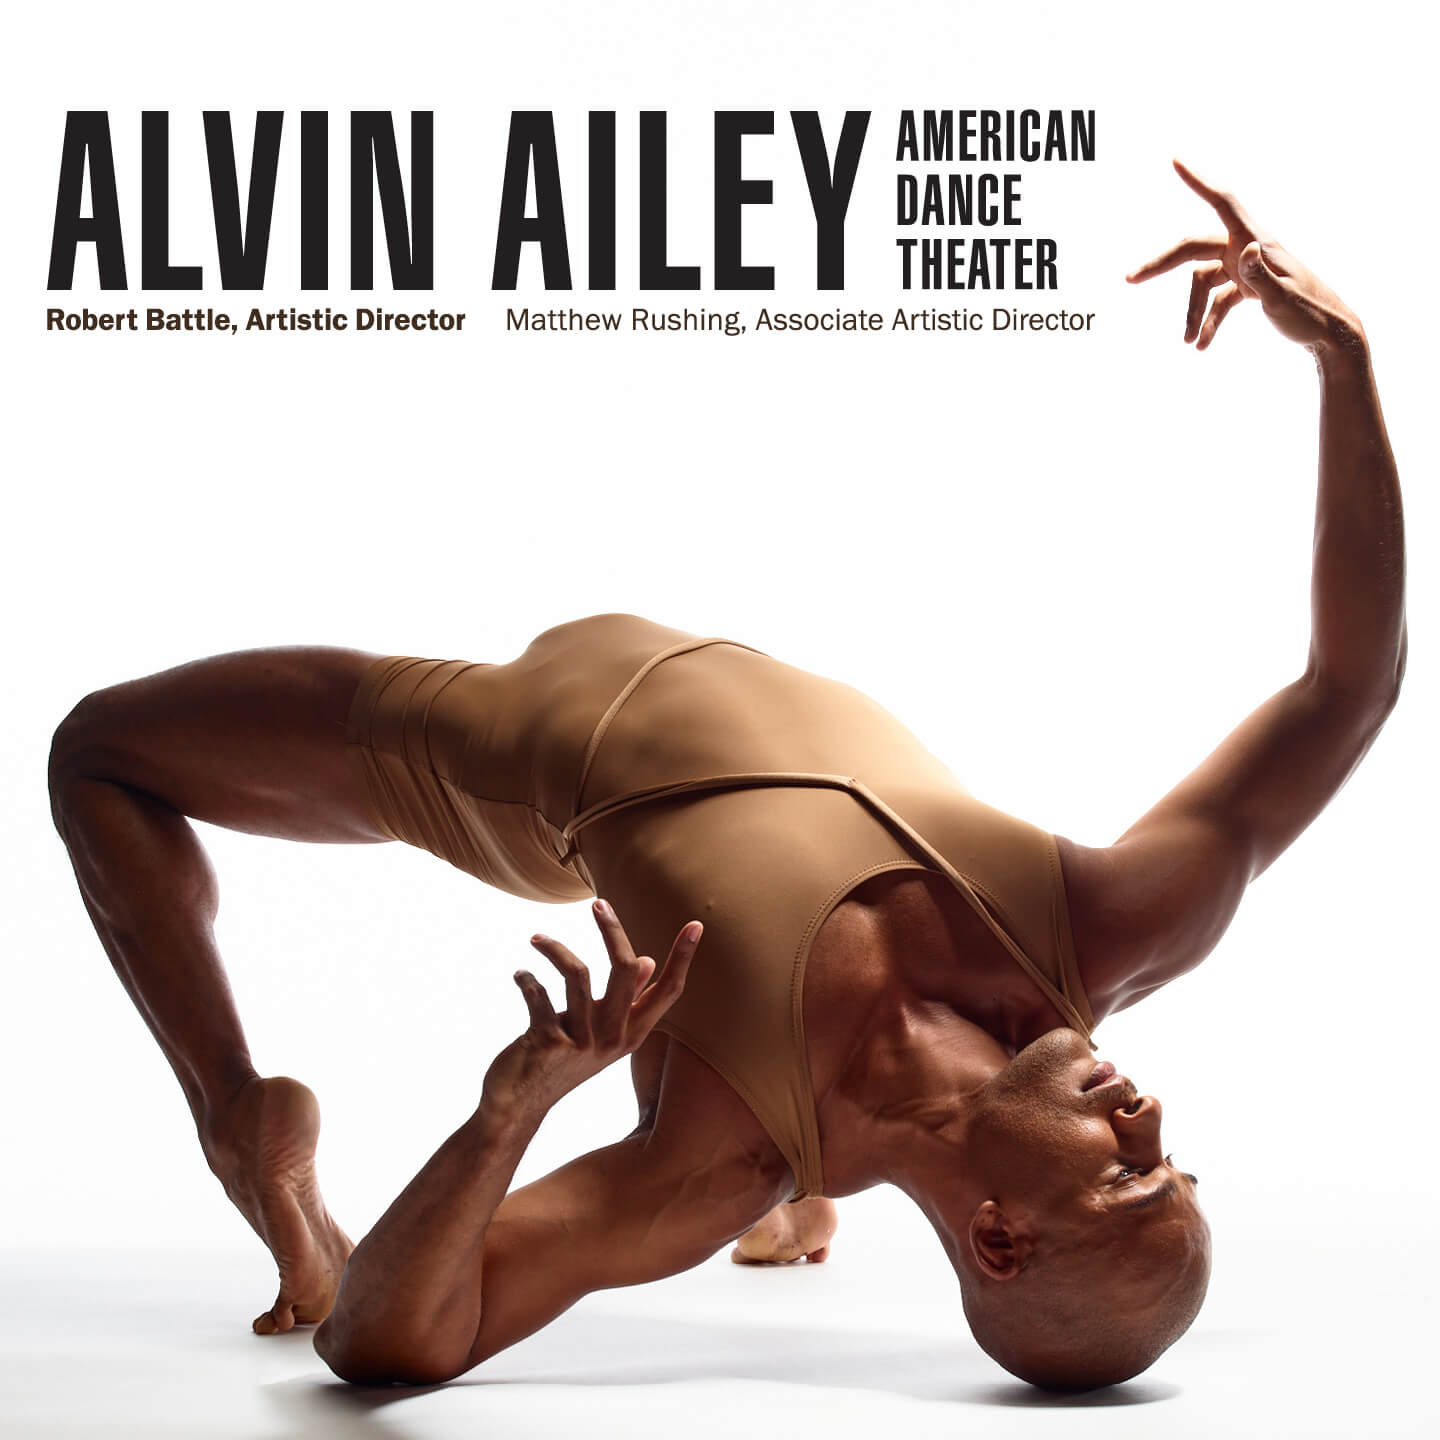 Alvin Ailey ® American Dance Theater